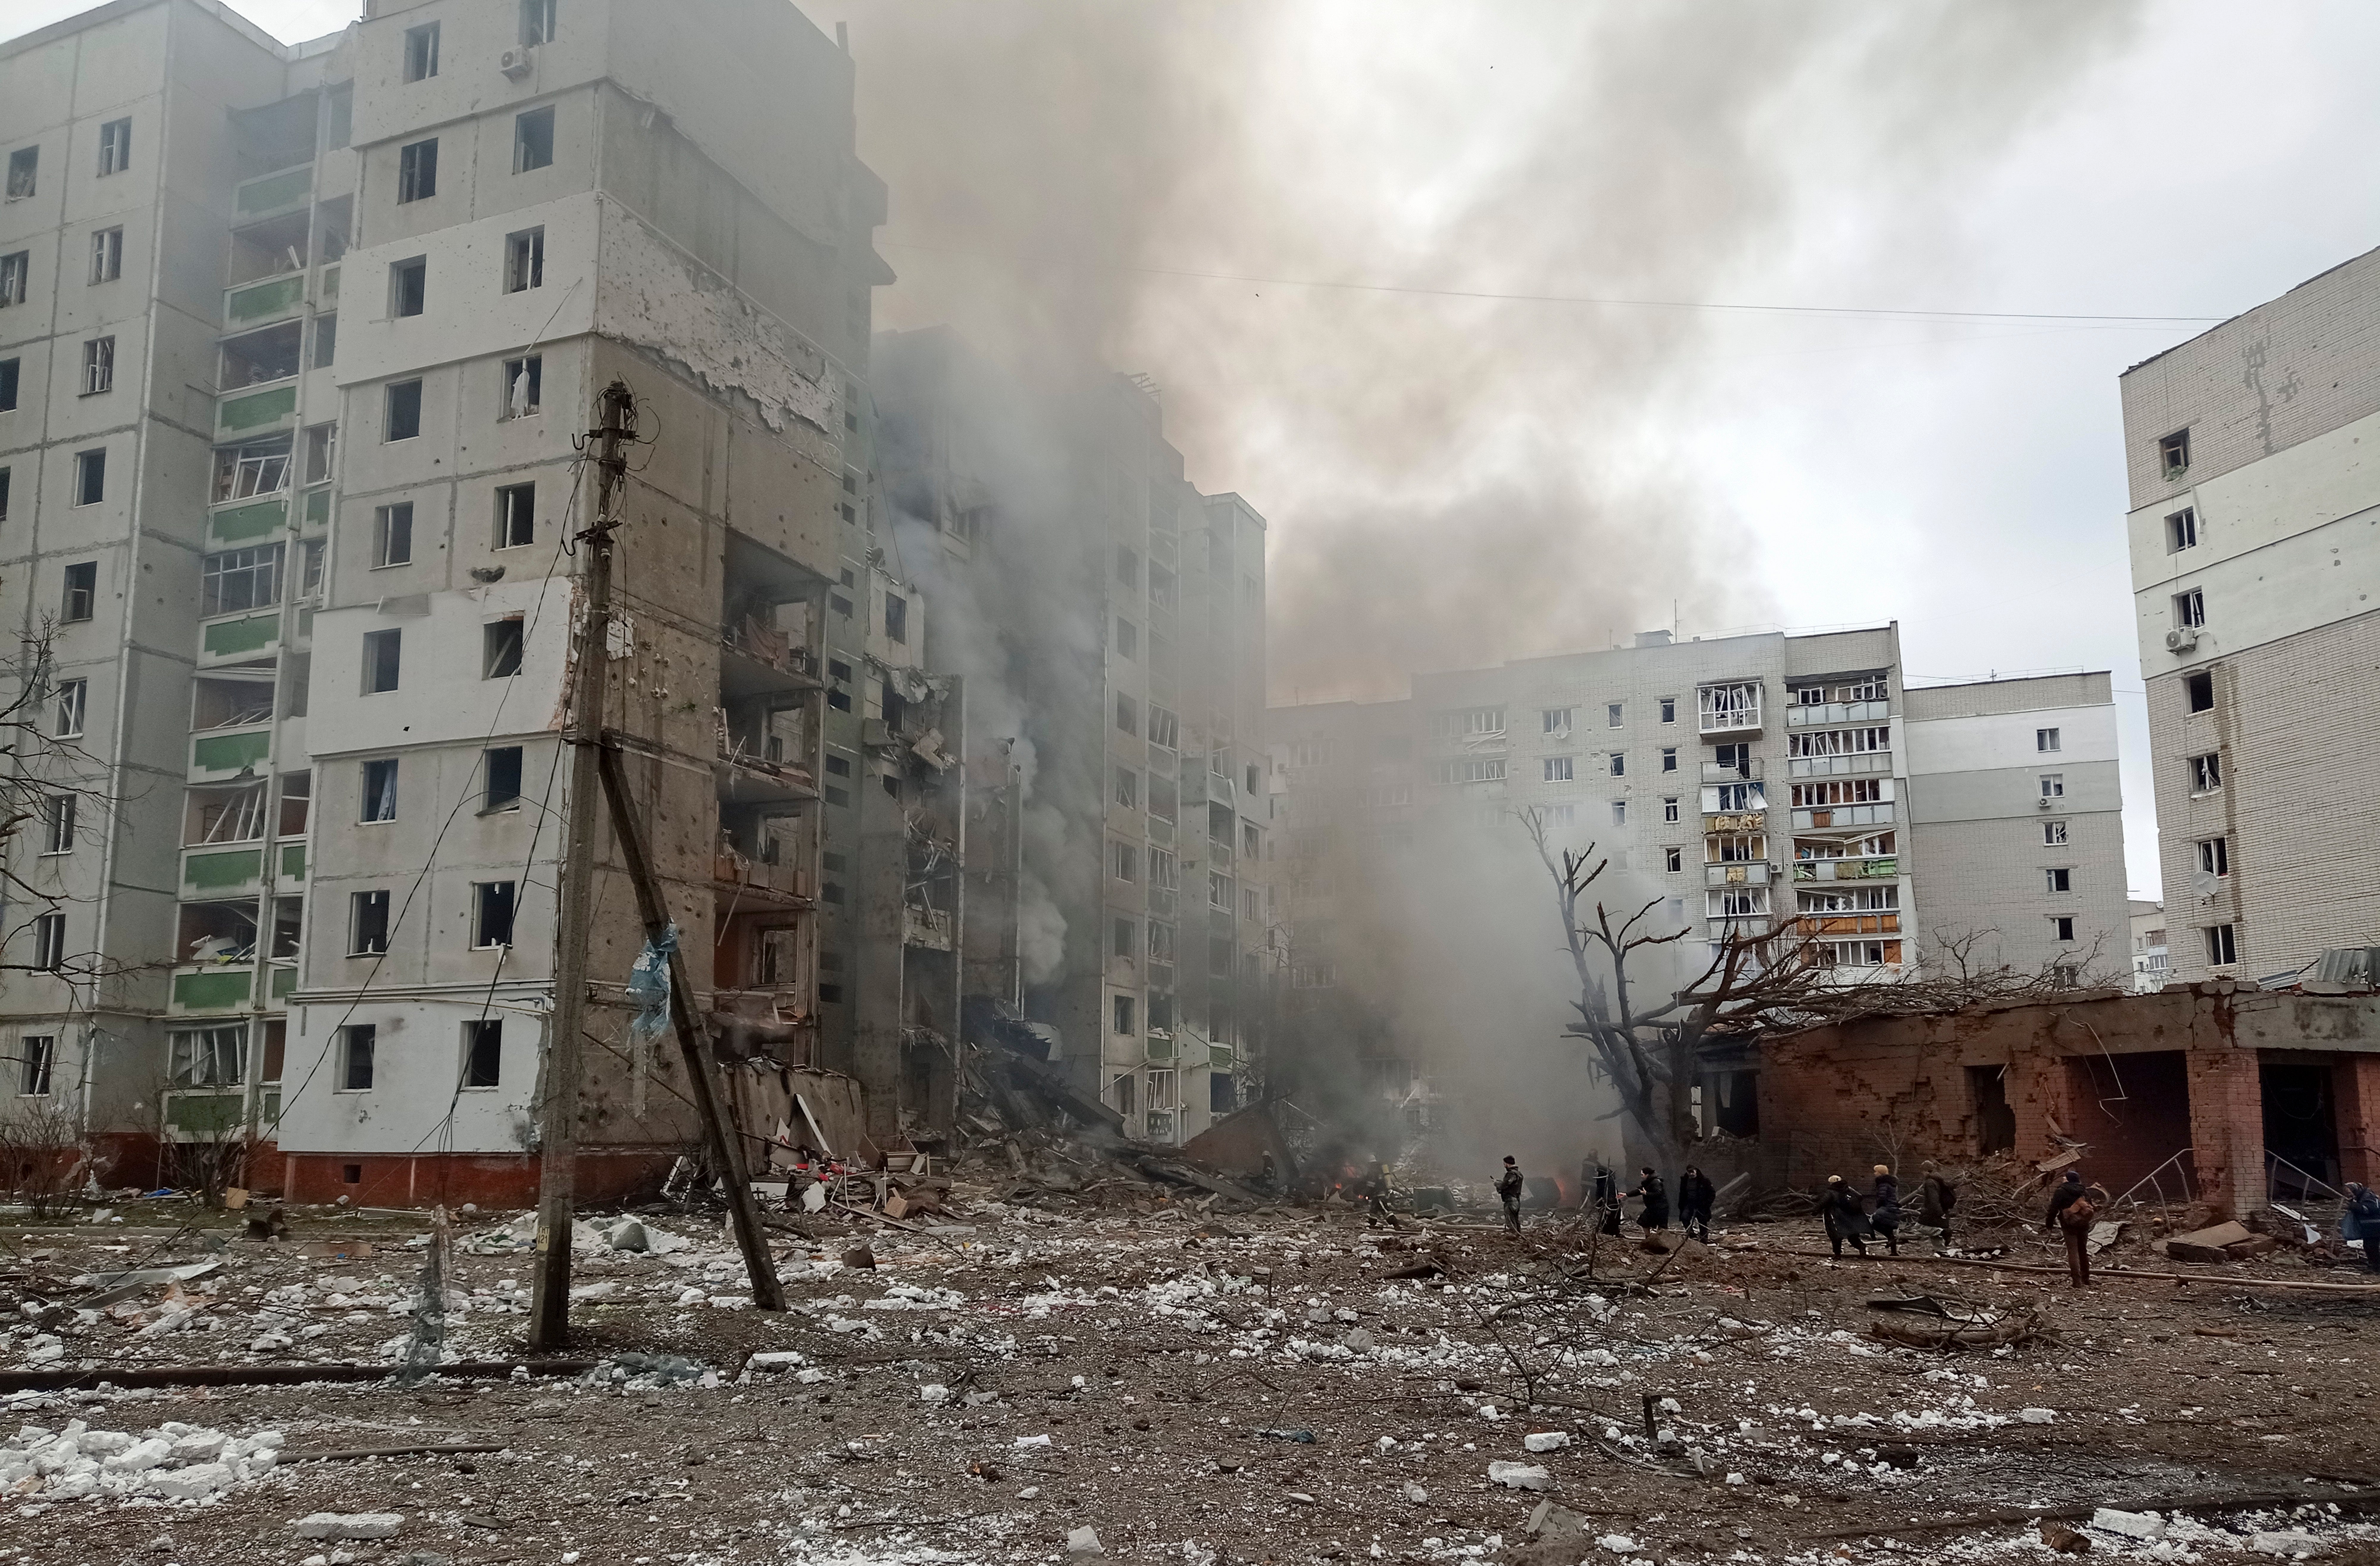 A view damaged city center after Russian air raid in Chernigiv, Ukraine (Dymitro Kumaka/AP)